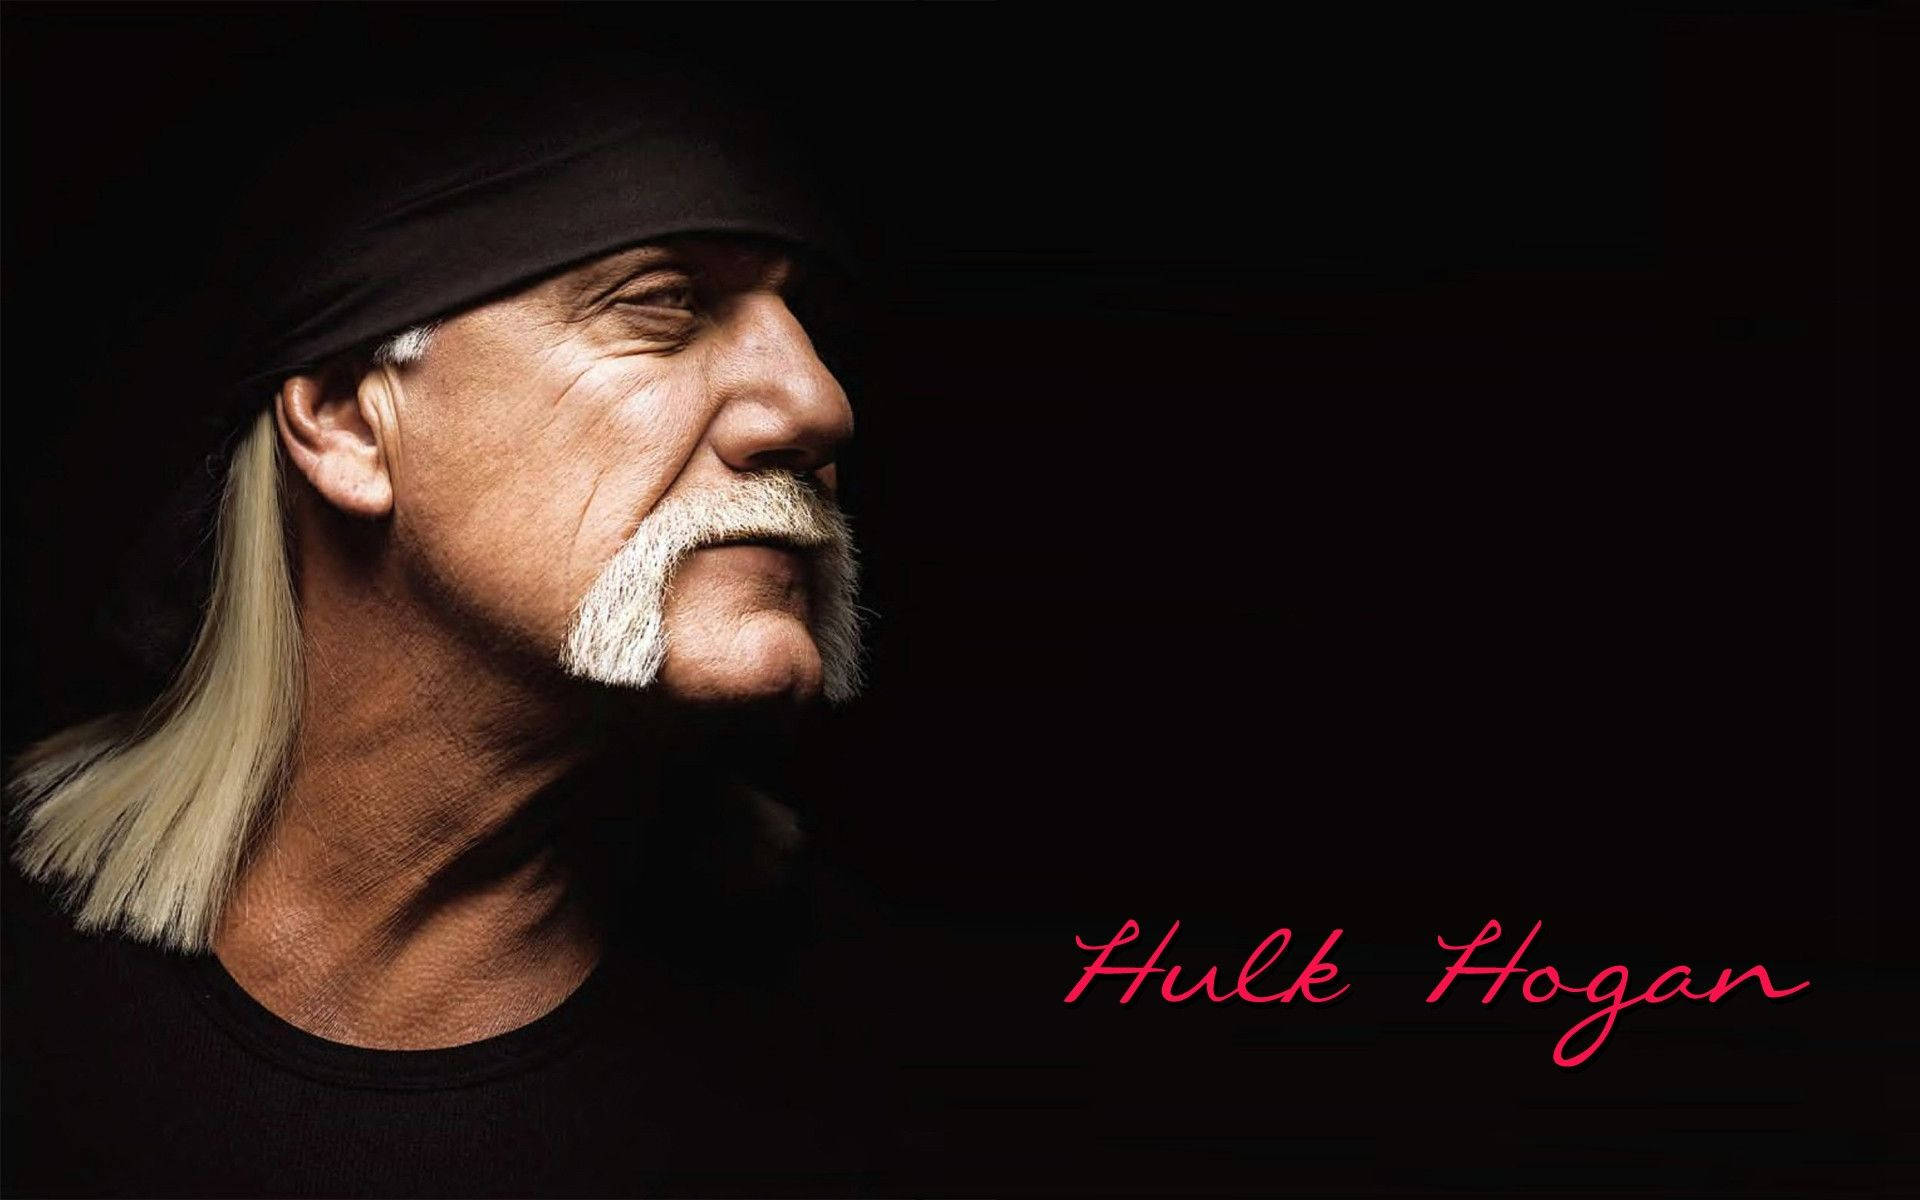 Hulk Hogan Dark Aesthetic Wallpaper